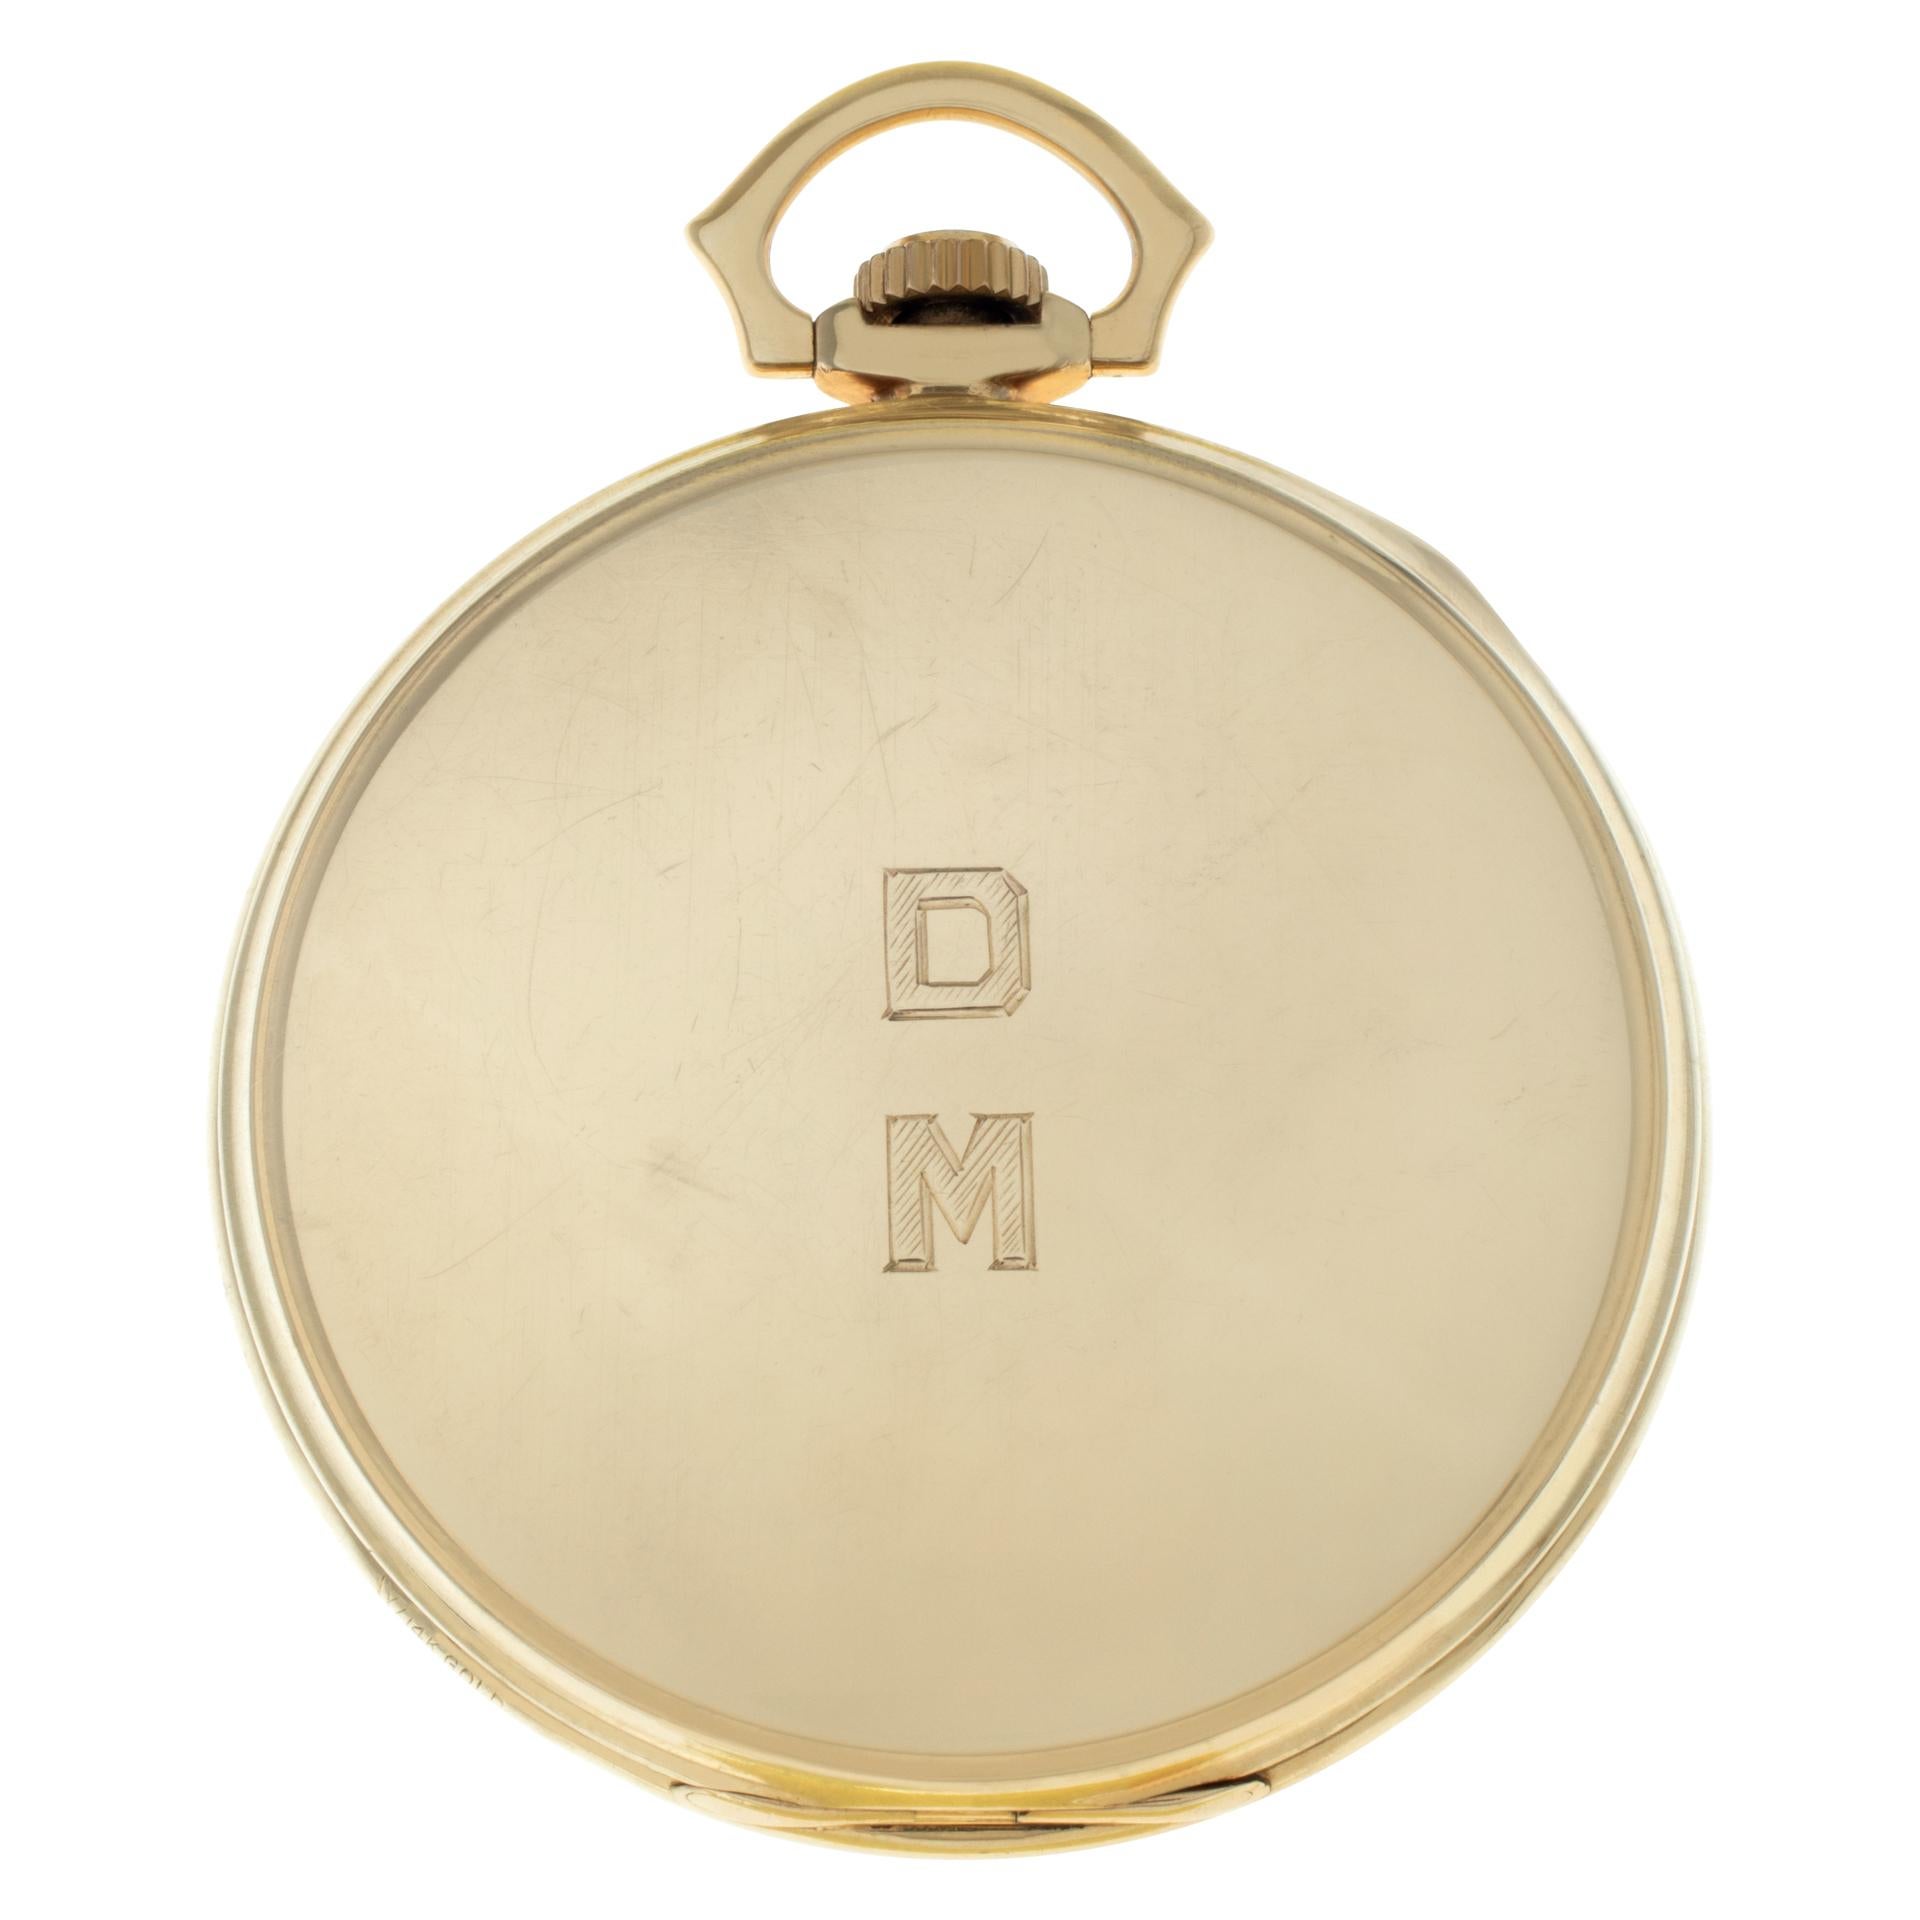 hamilton gold pocket watch value